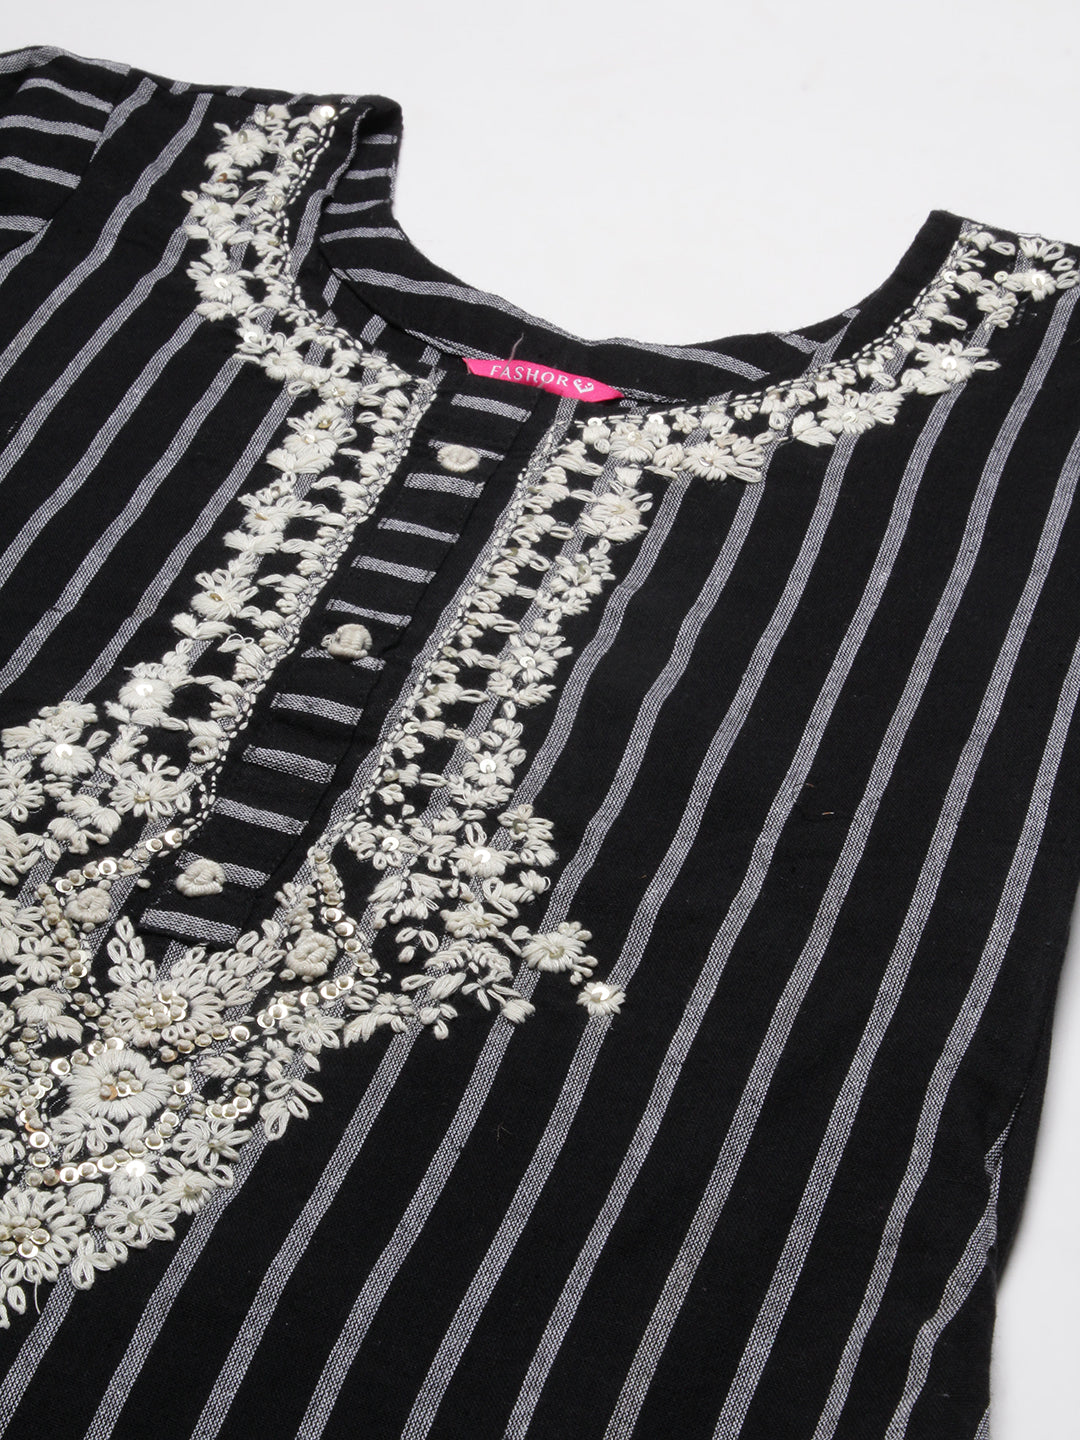 Woven Striped Resham & Sequins Embroidered Kurta - Black